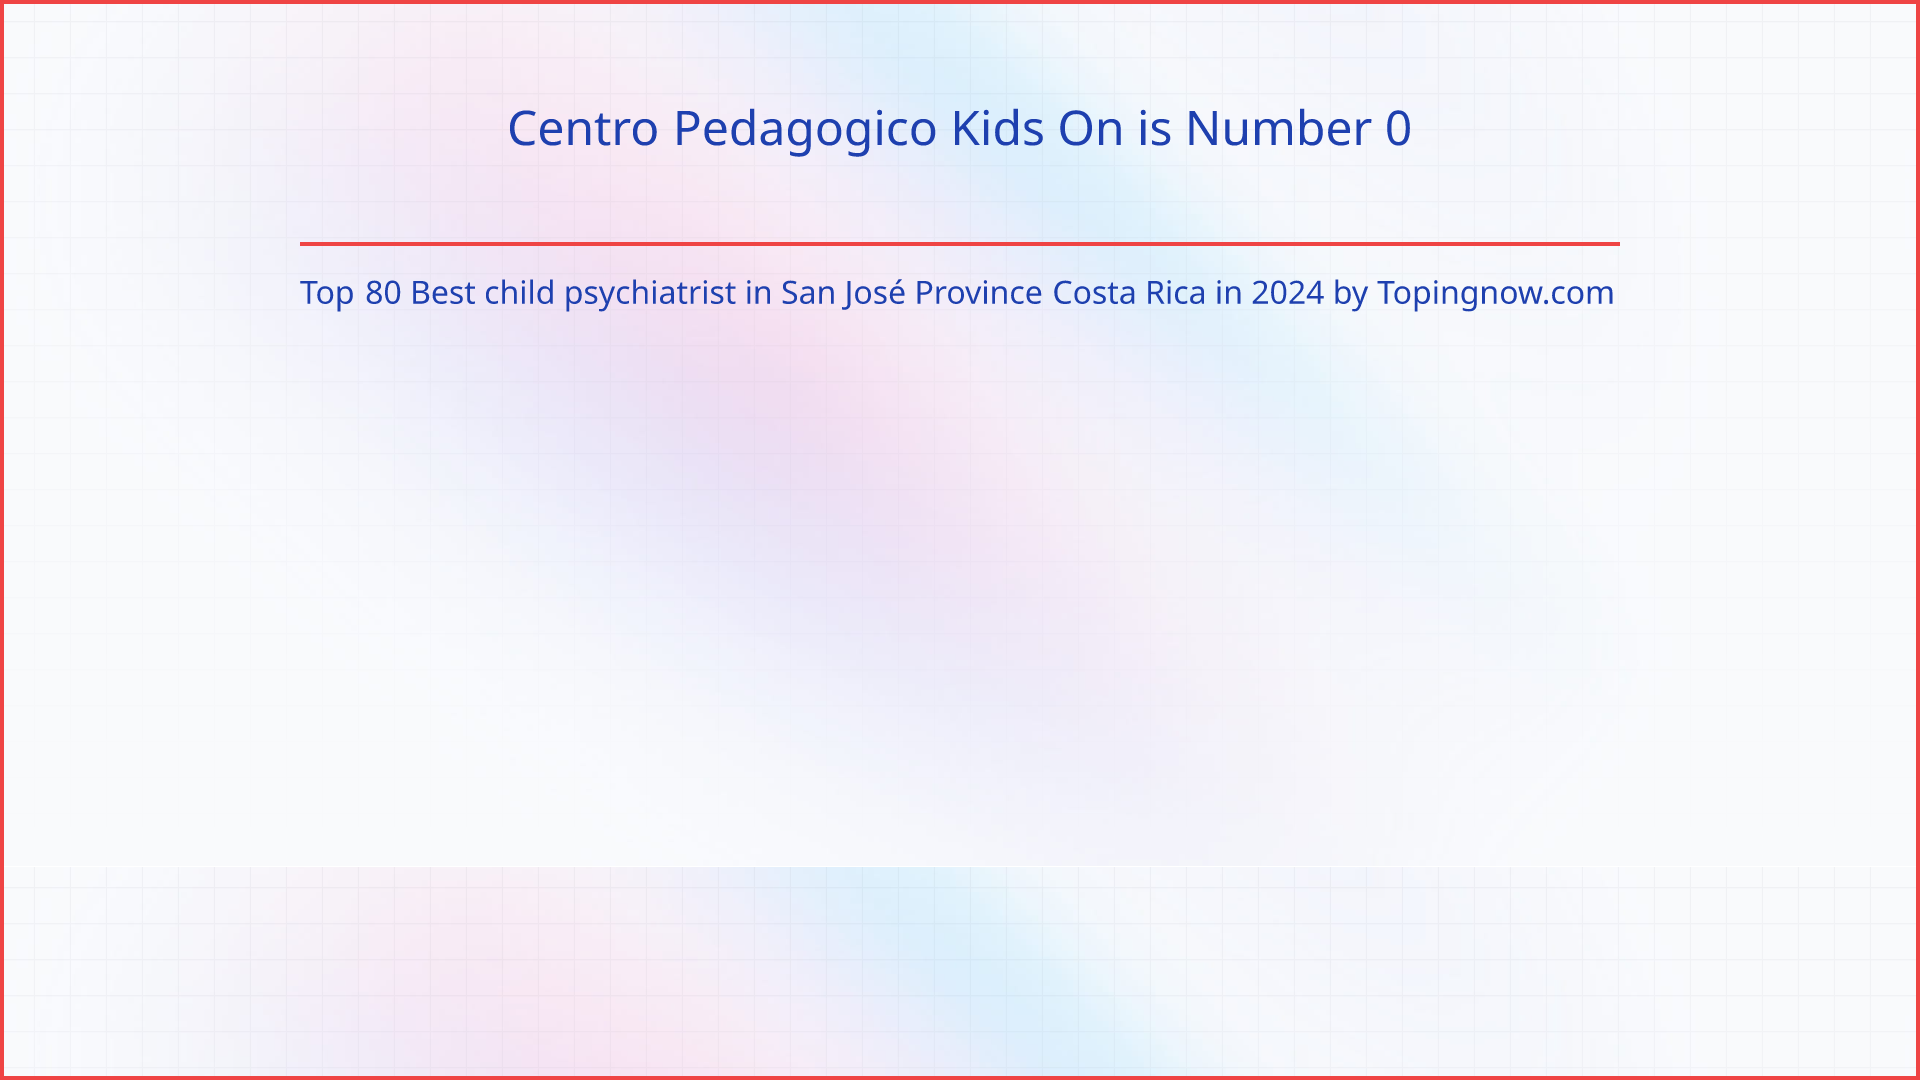 Centro Pedagogico Kids On: Top 80 Best child psychiatrist in San José Province Costa Rica in 2024